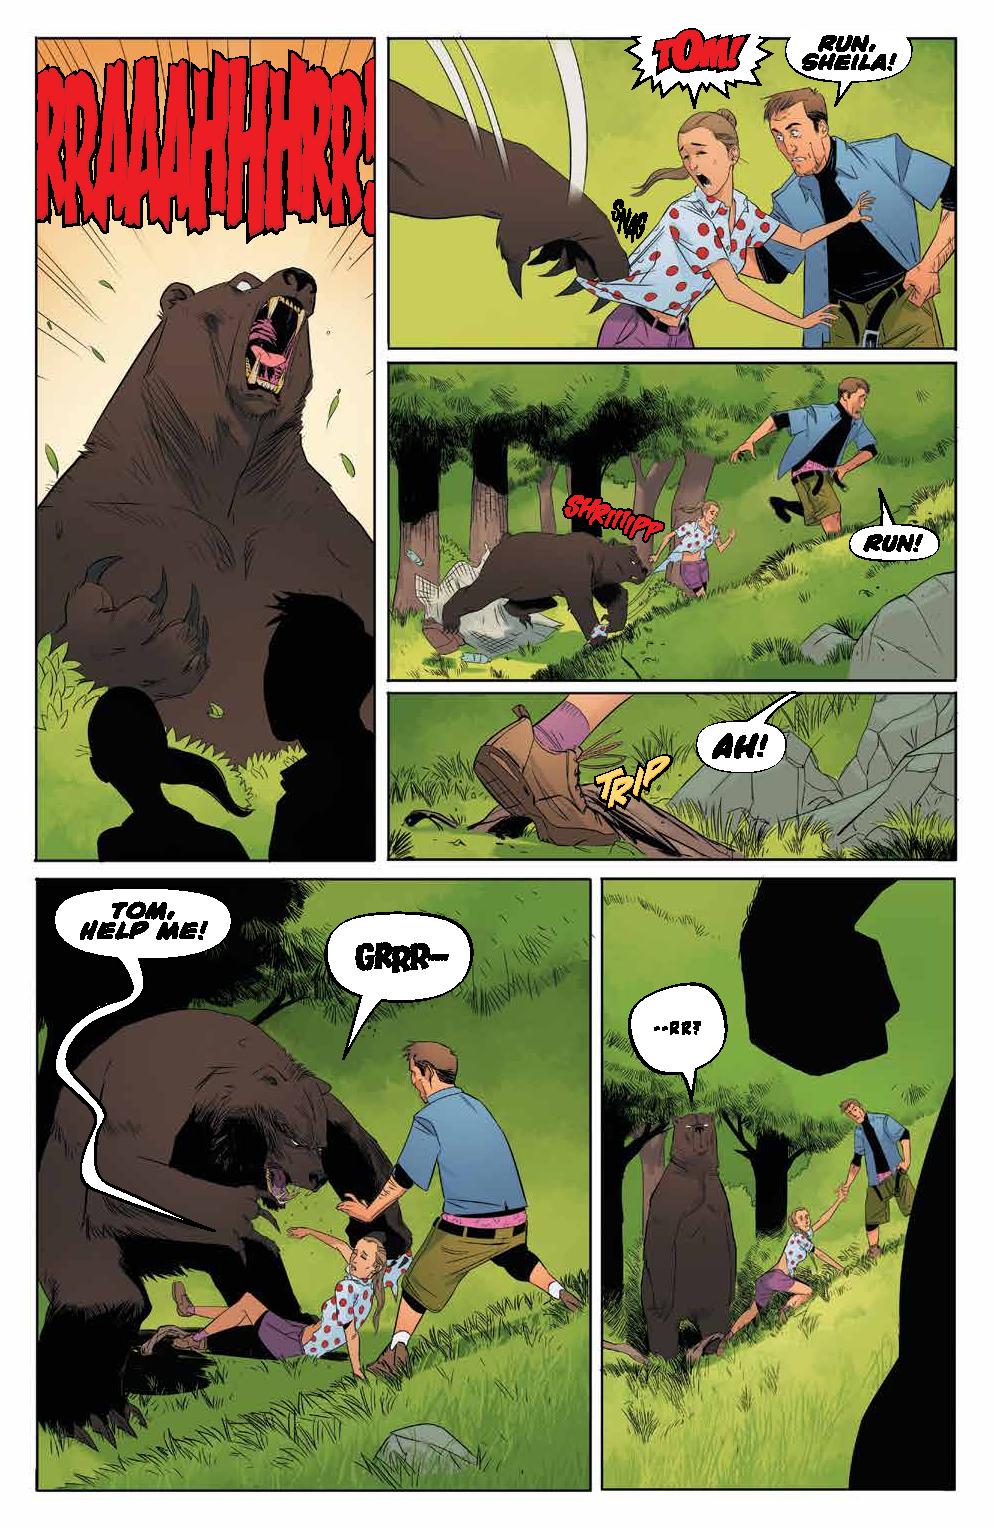 Shirtless Bear-Fighter Graphic Novel Volume 1 (Mature)